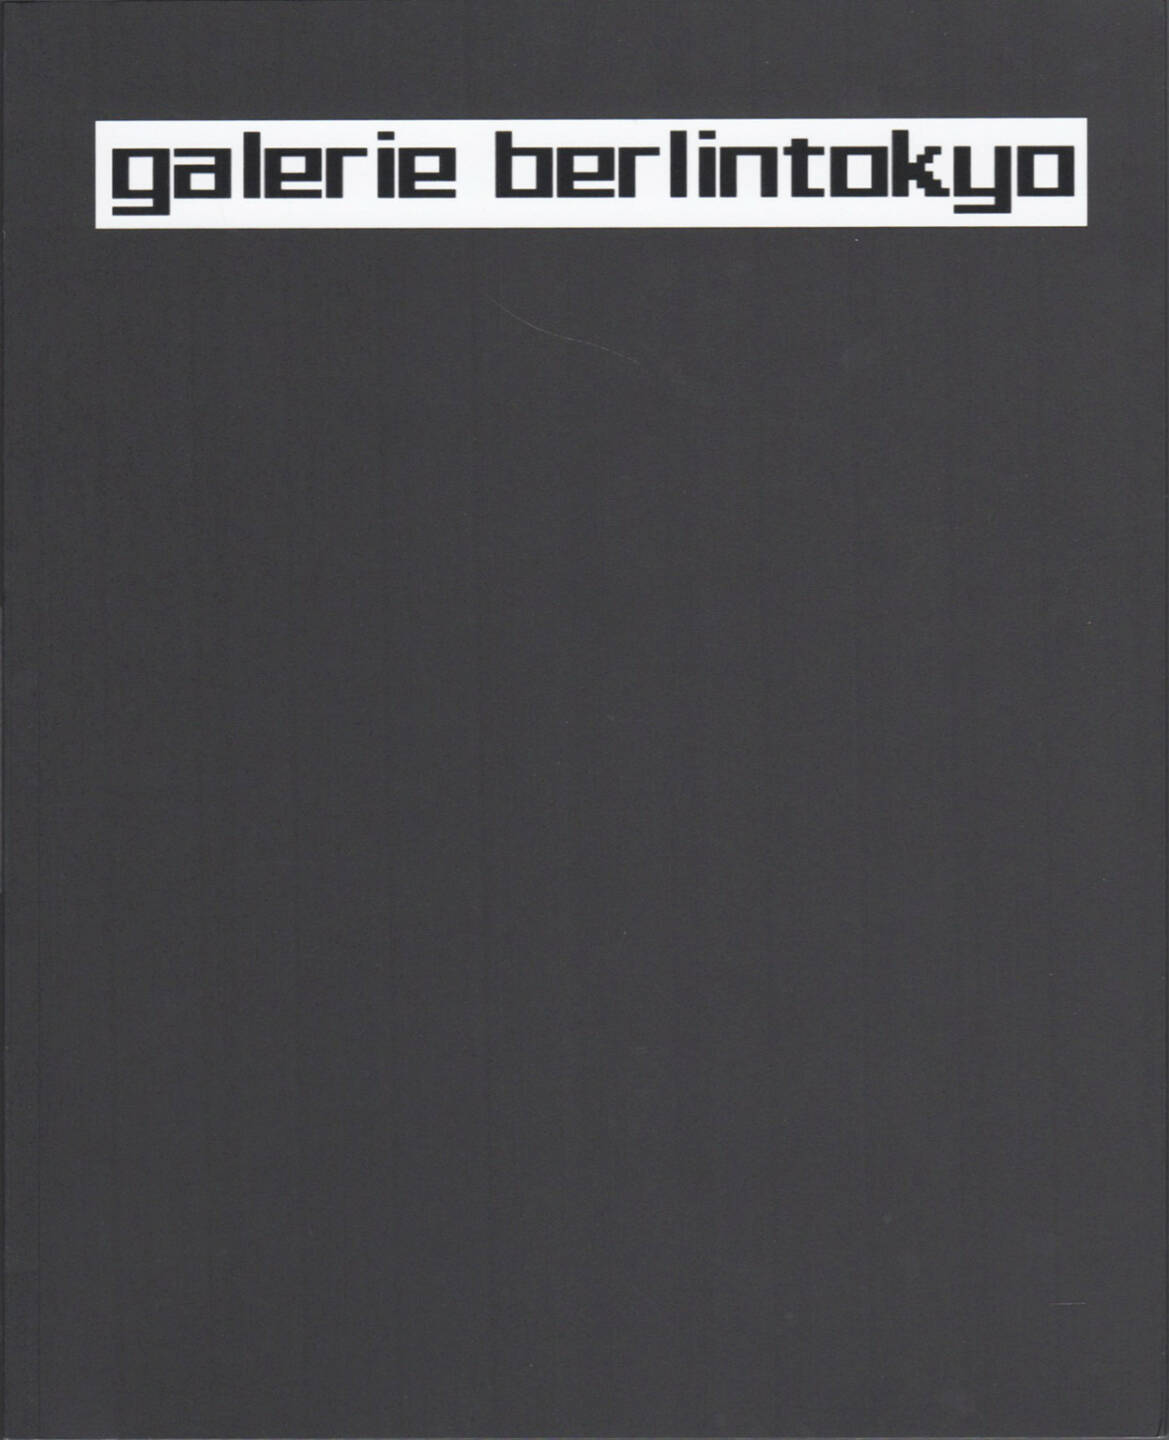 Martin Eberle - galerie berlintokyo, Drittel Books 2013, Cover - http://josefchladek.com/book/martin_eberle_-_galerie_berlintokyo